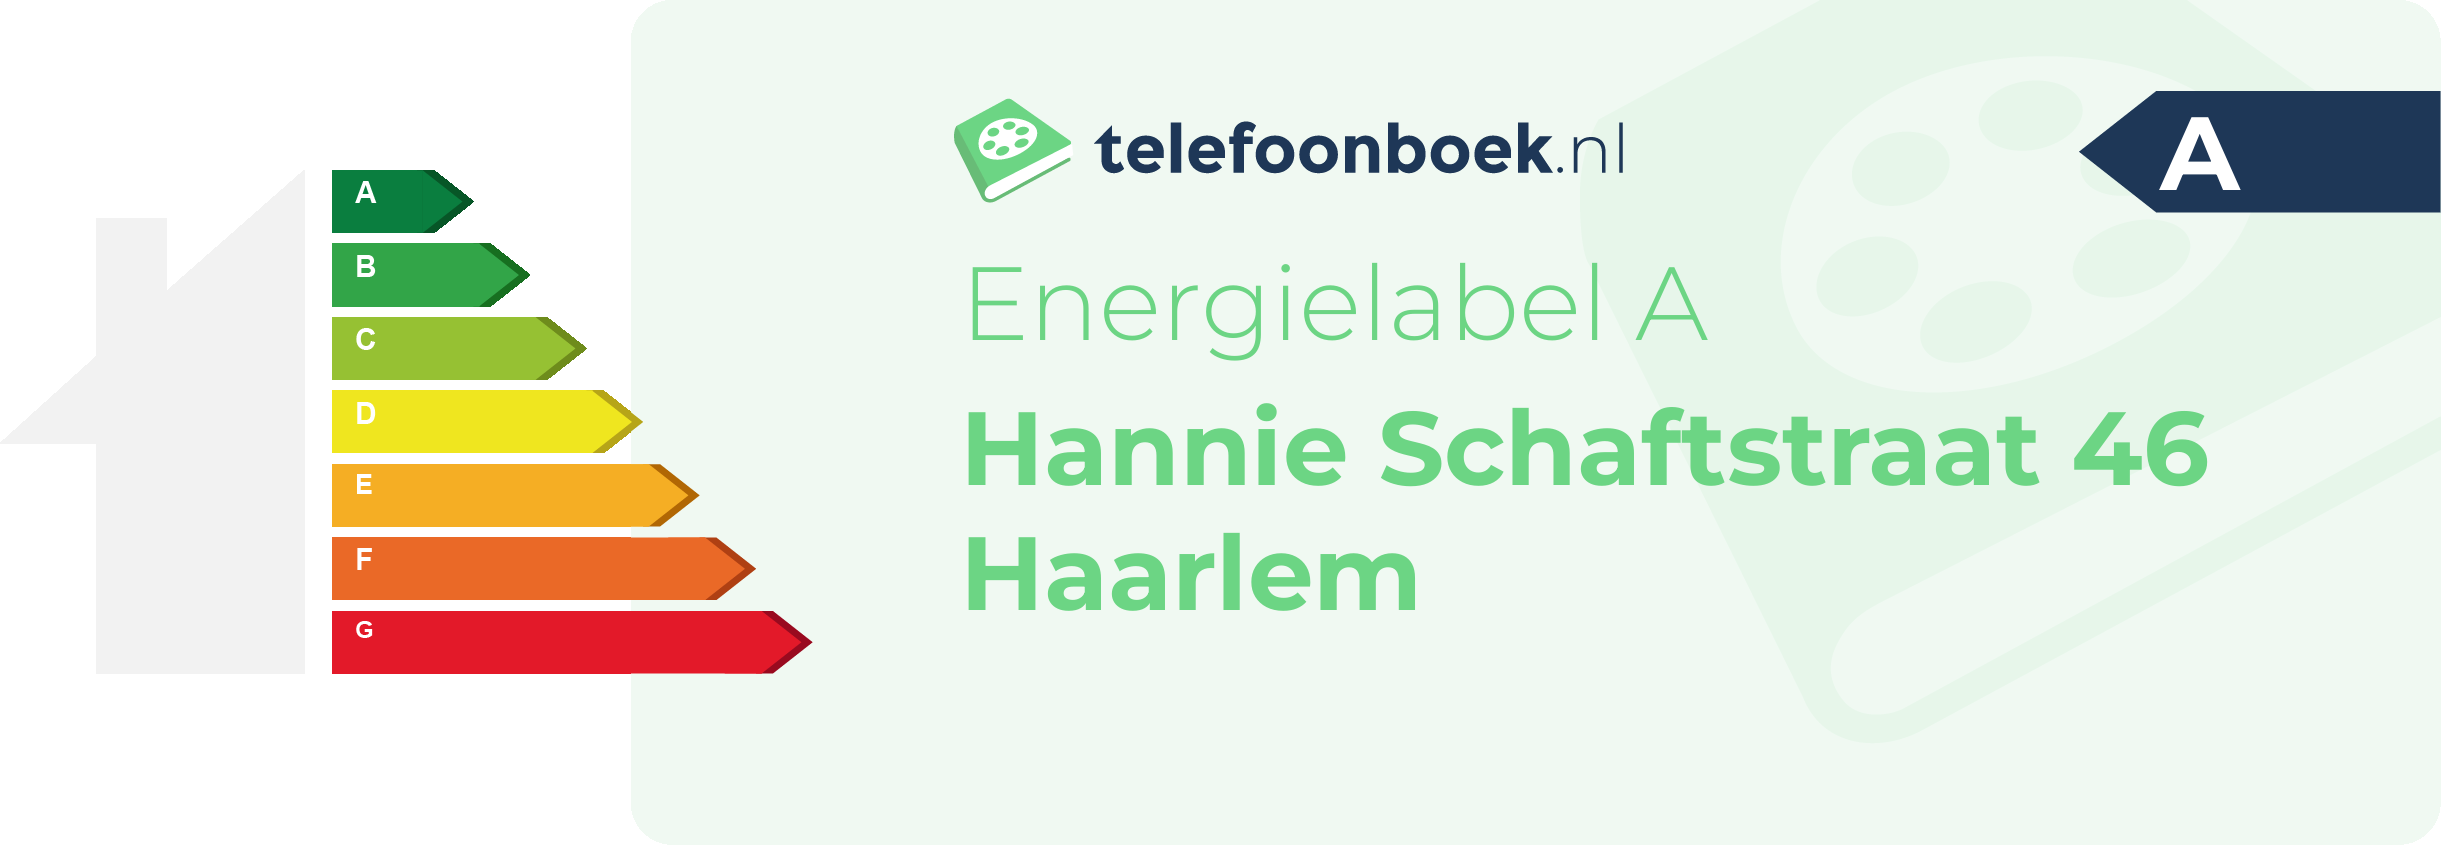 Energielabel Hannie Schaftstraat 46 Haarlem